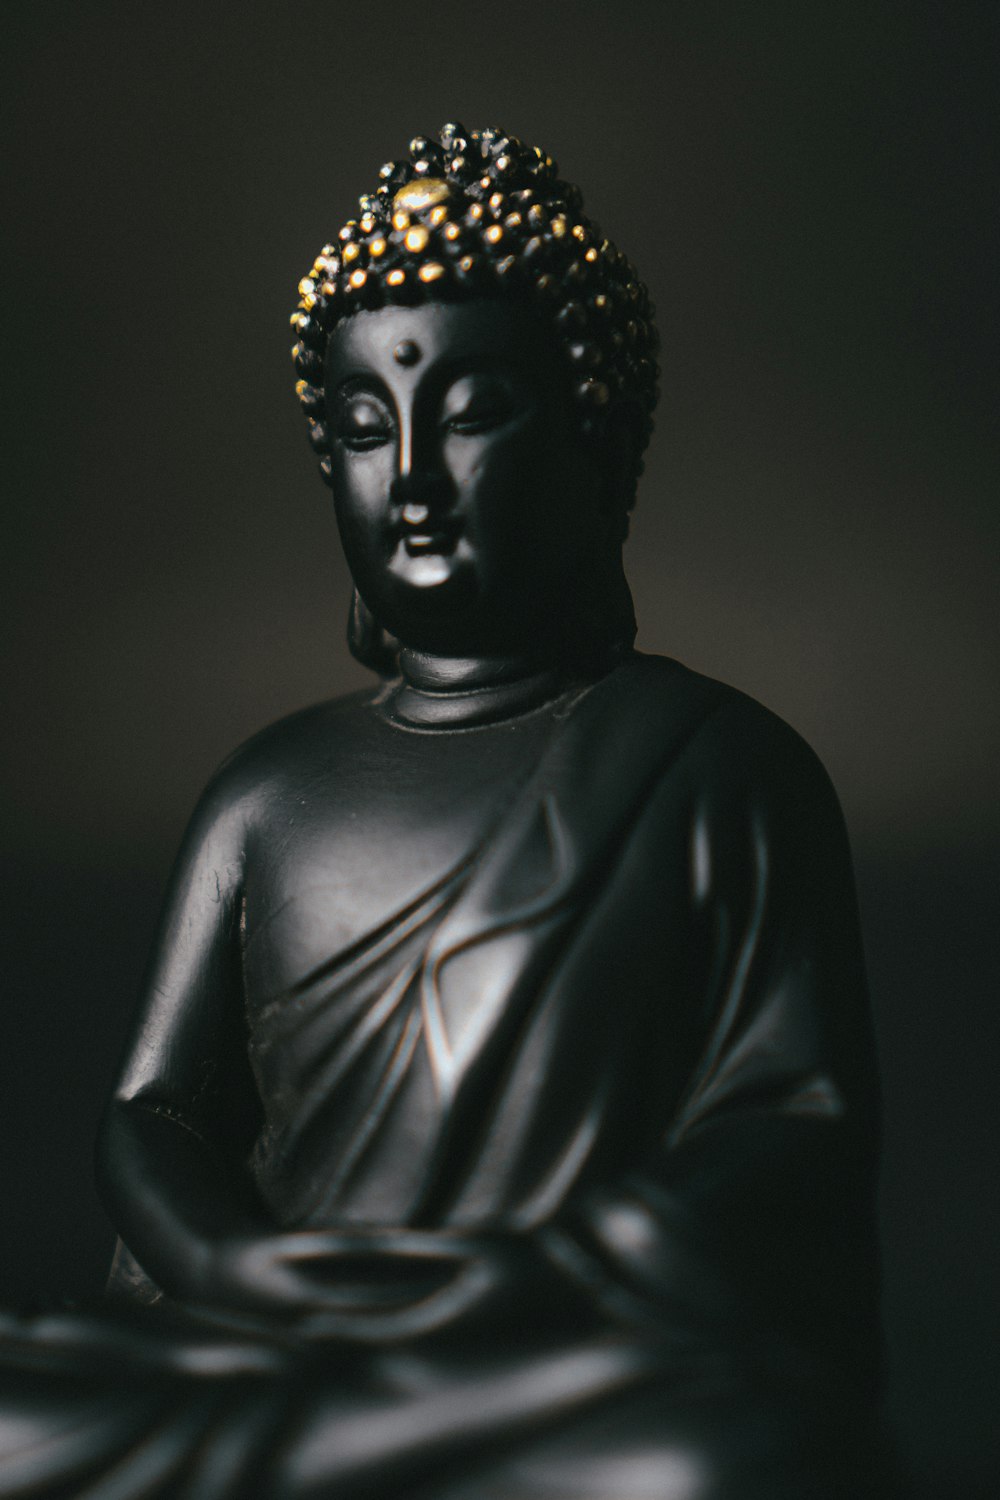 black ceramic buddha statue in close up photography